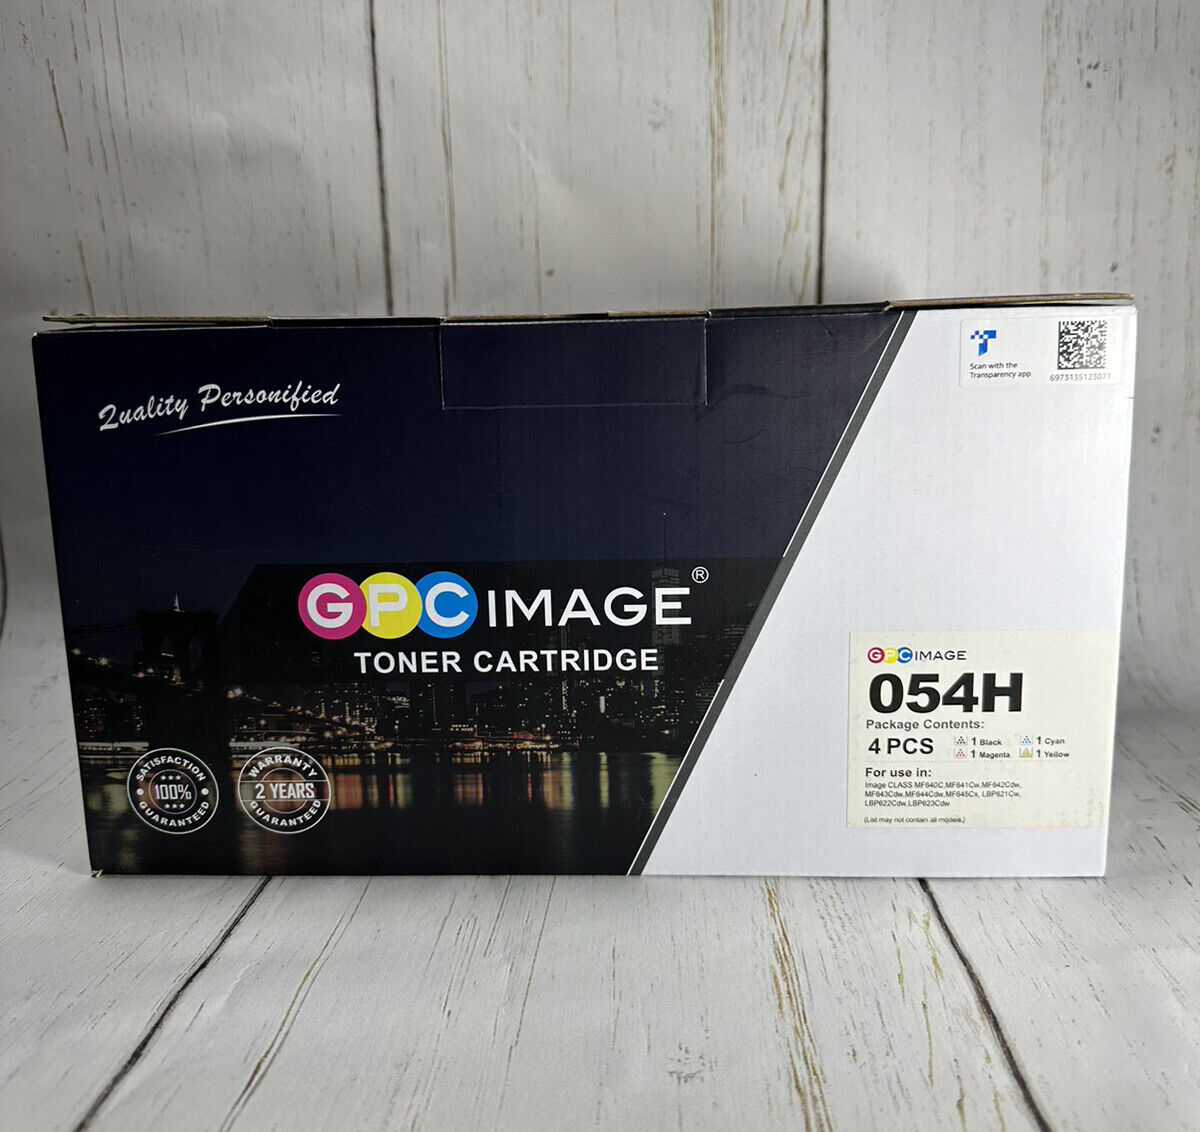 GPC Image Toner Cartridge 054H 4PCS NEW for Canon Image Class Printers NIB